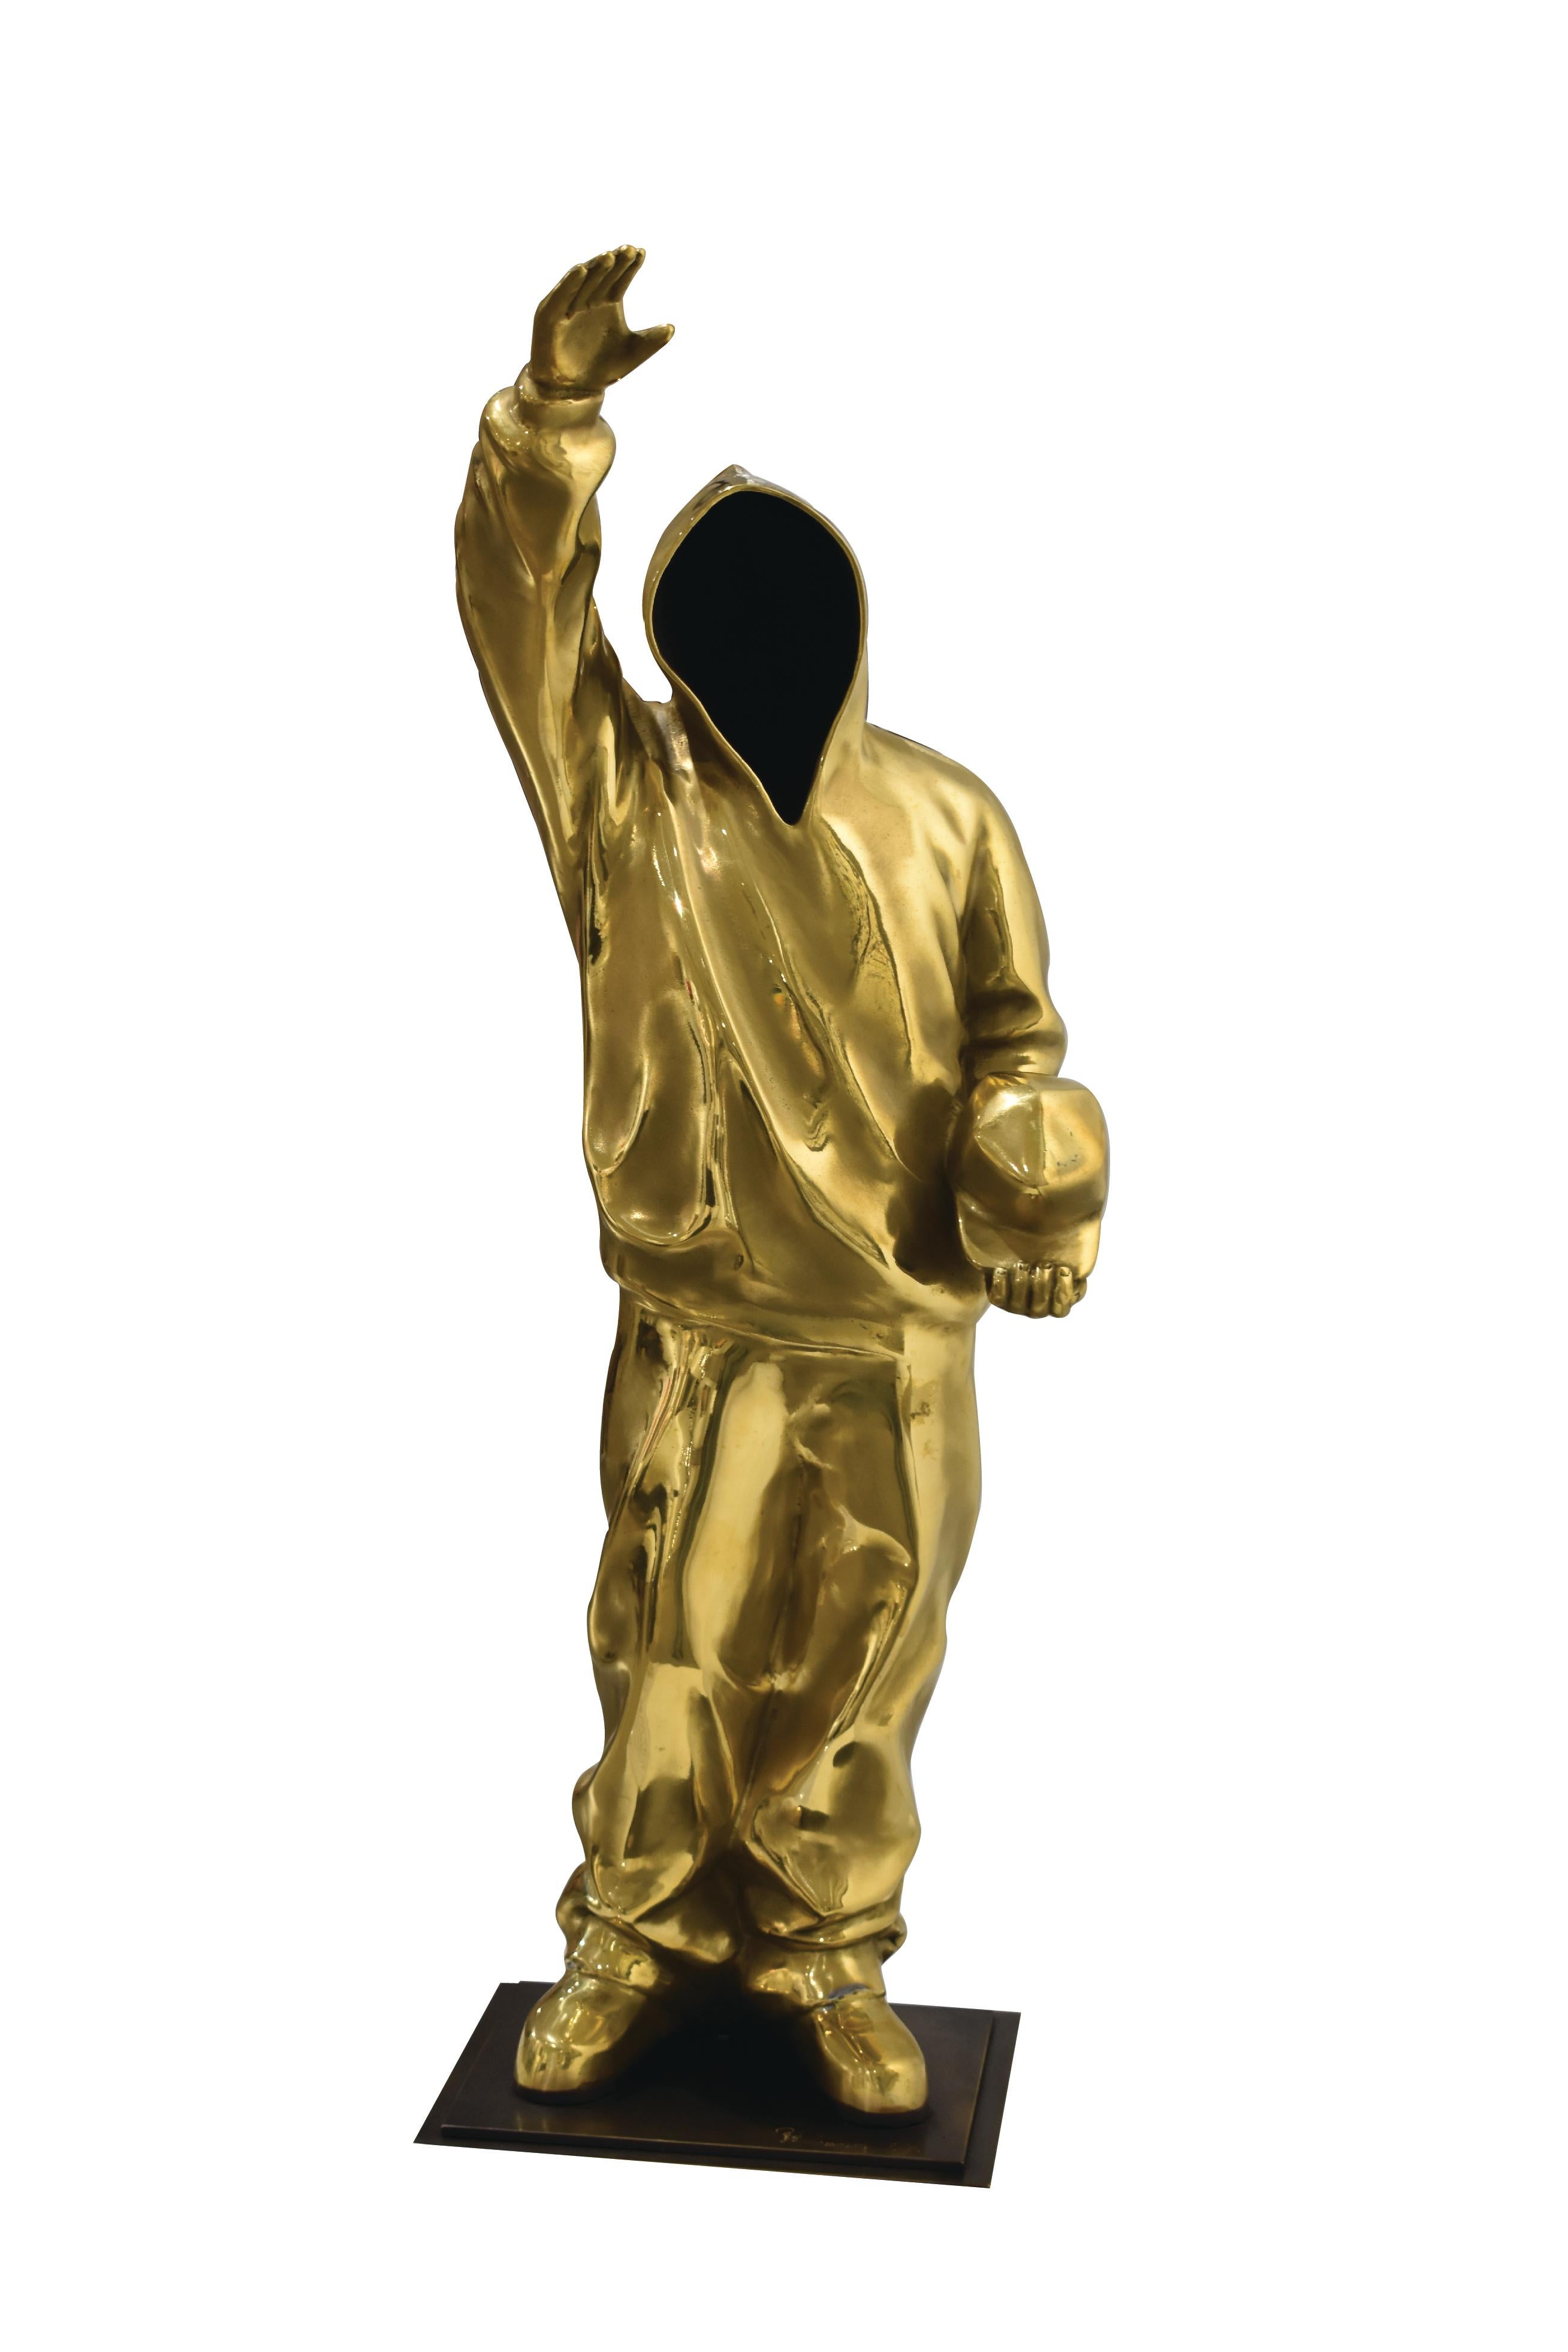 Golden Bronze Made Figure Sculpture In Hip-hop Pop Hoodie Style. Limited Edition